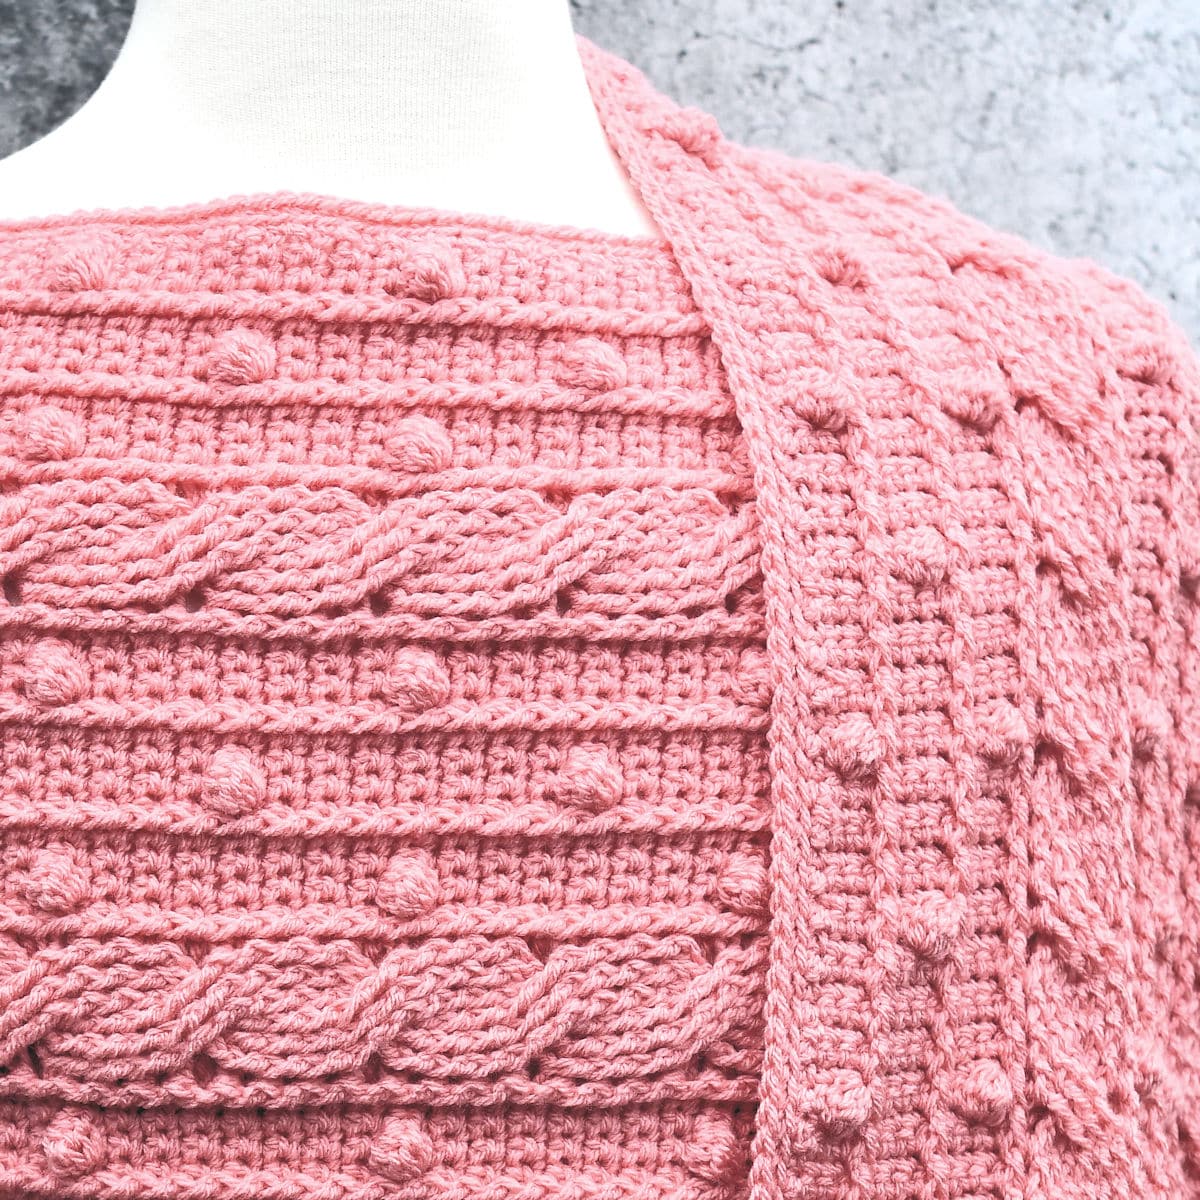 MakeItCrochet: Crochet Cable Stitch Shawl Pattern by Kim Guzman